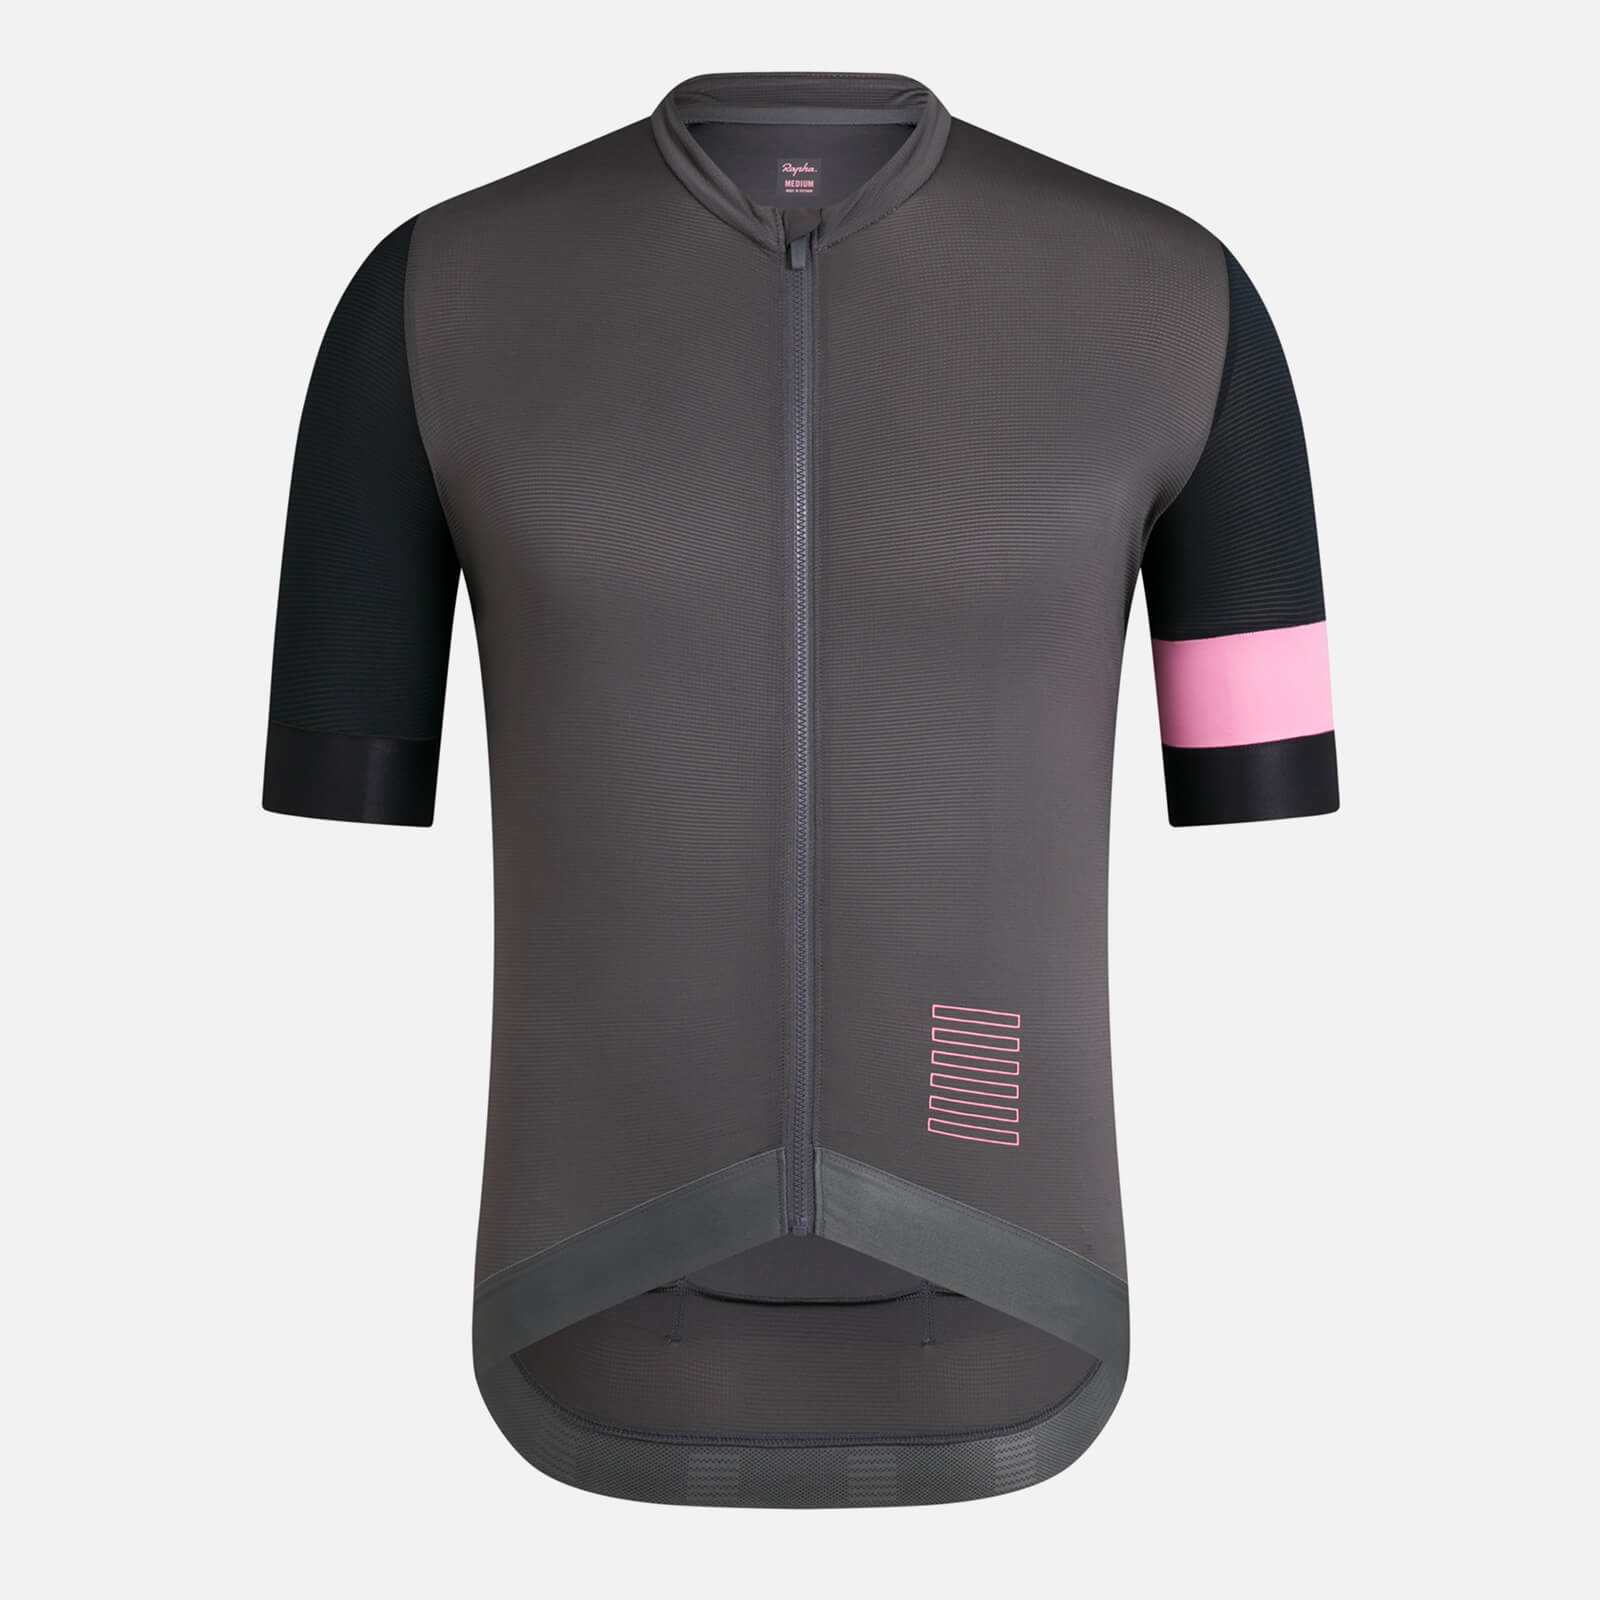 rapha men's pro team training jersey - carbon grey/black/pink - s